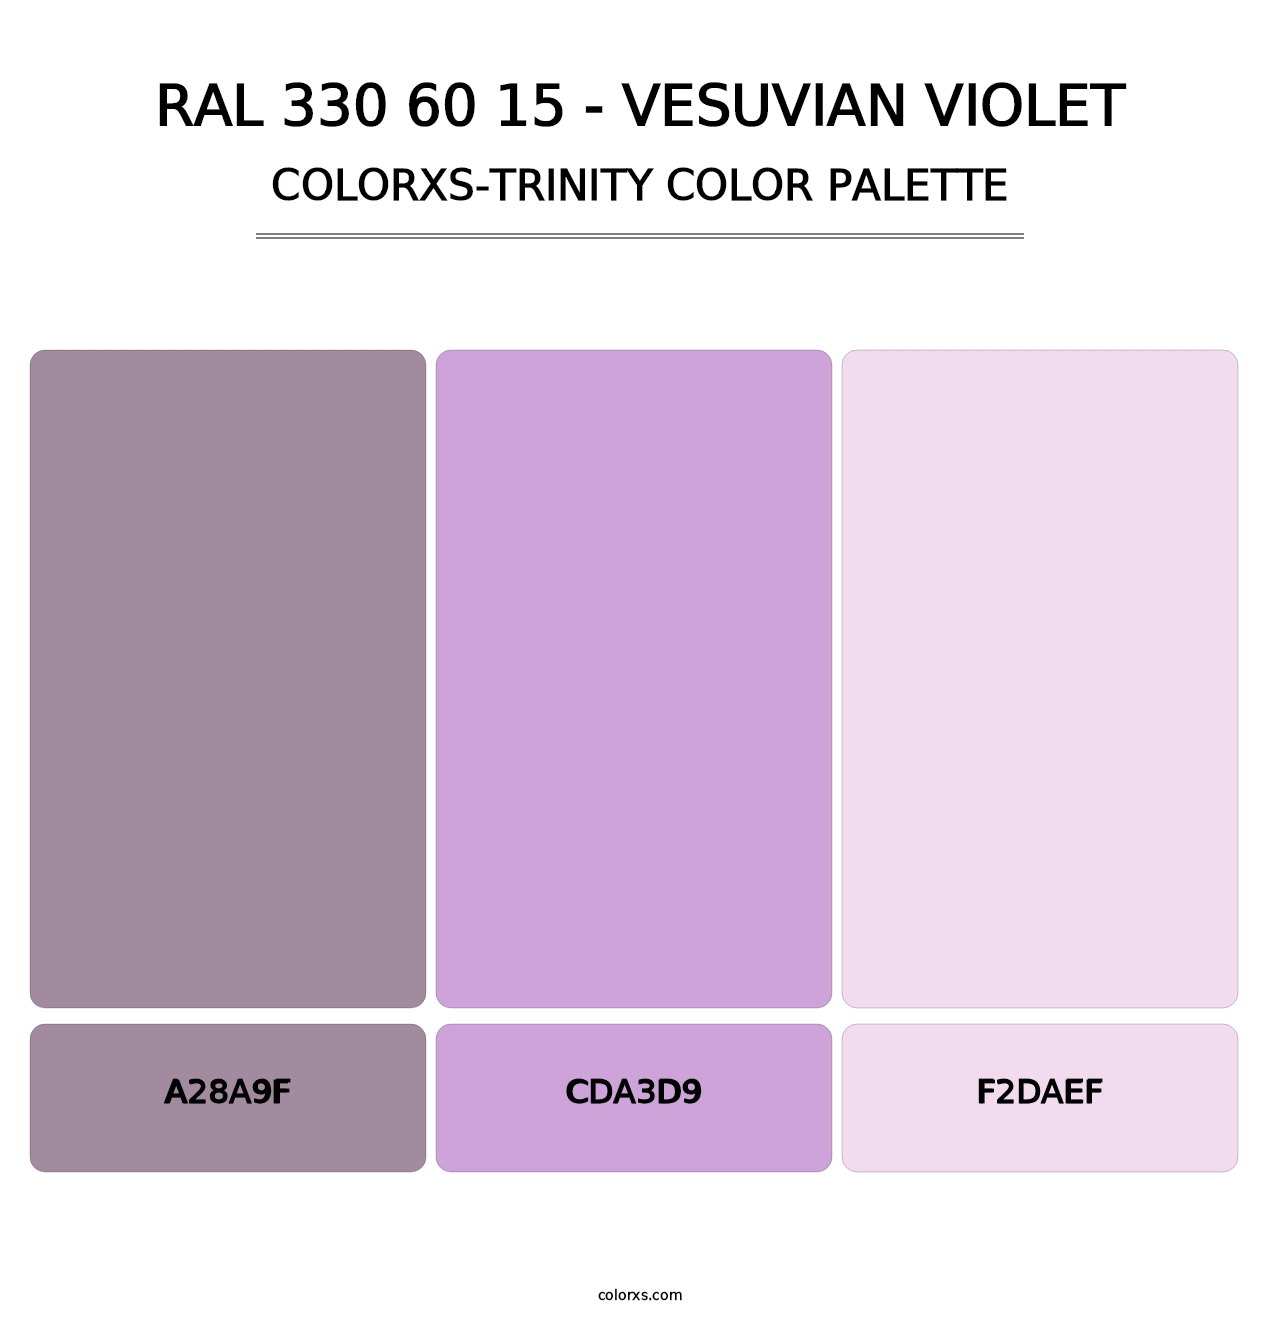 RAL 330 60 15 - Vesuvian Violet - Colorxs Trinity Palette